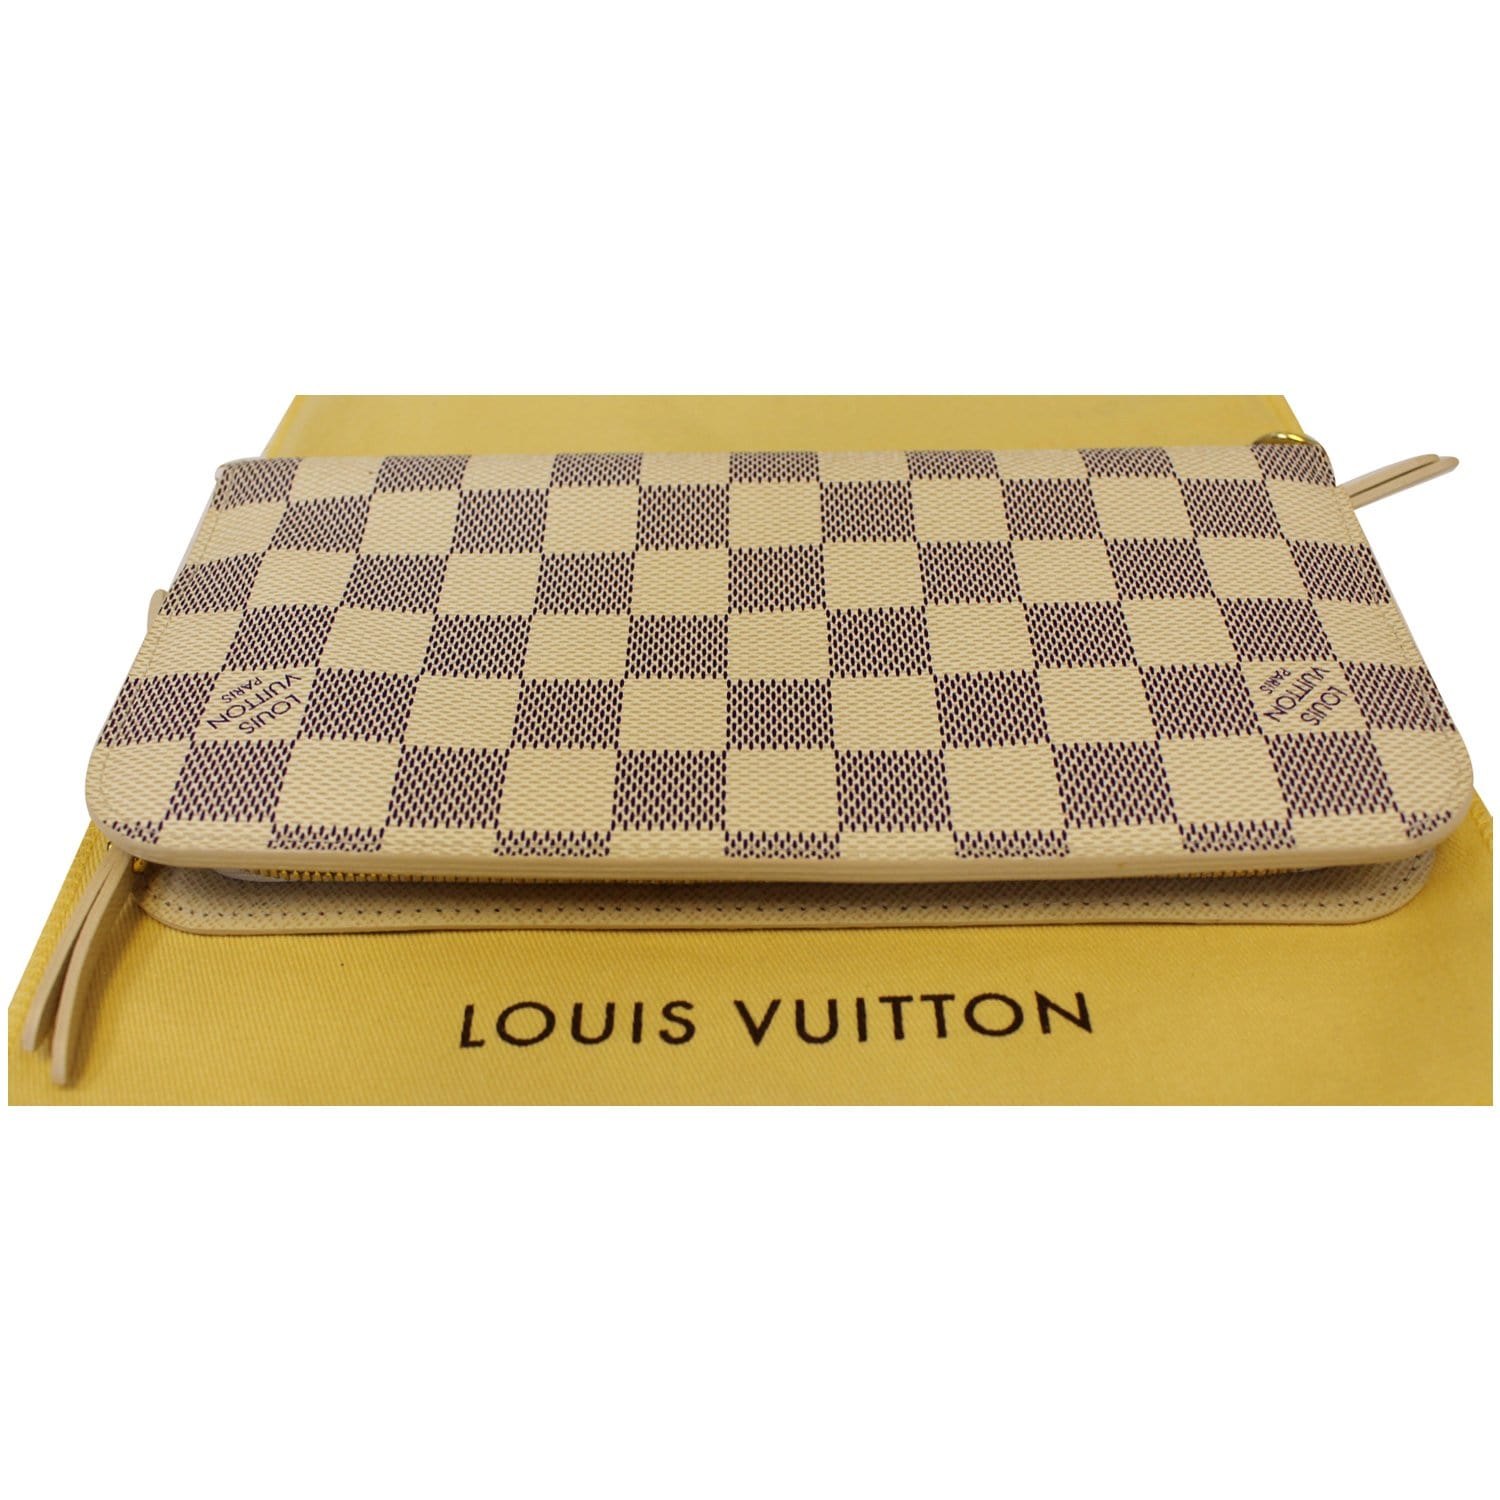 Authentic Louis Vuitton Damier Trunks & Locks Insolite Wallet Limited  Edition